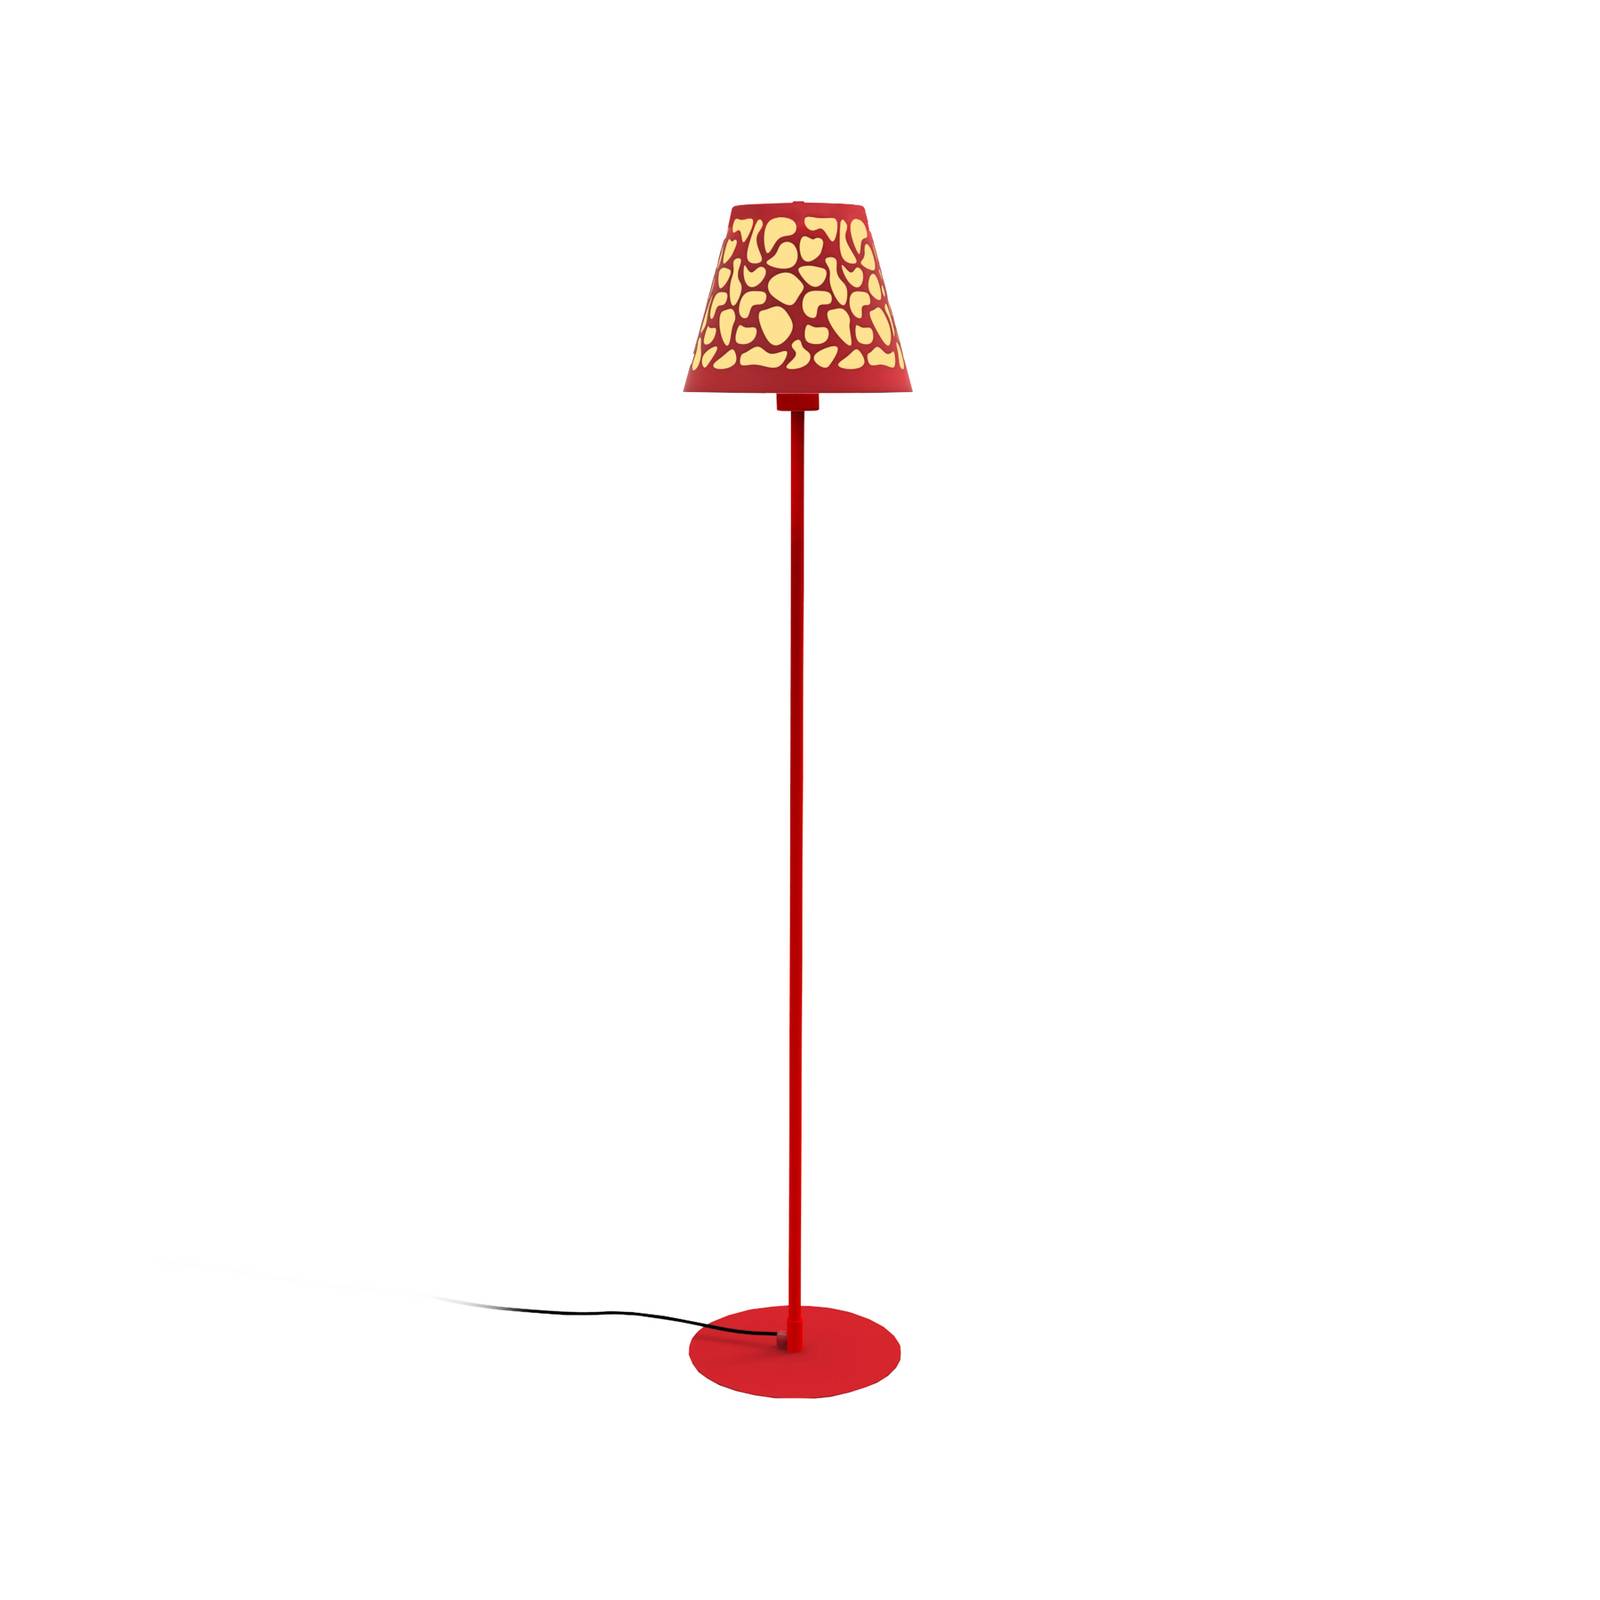 Aluminor Nihoa Stehlampe mit Lochmuster, rot/gelb von Aluminor